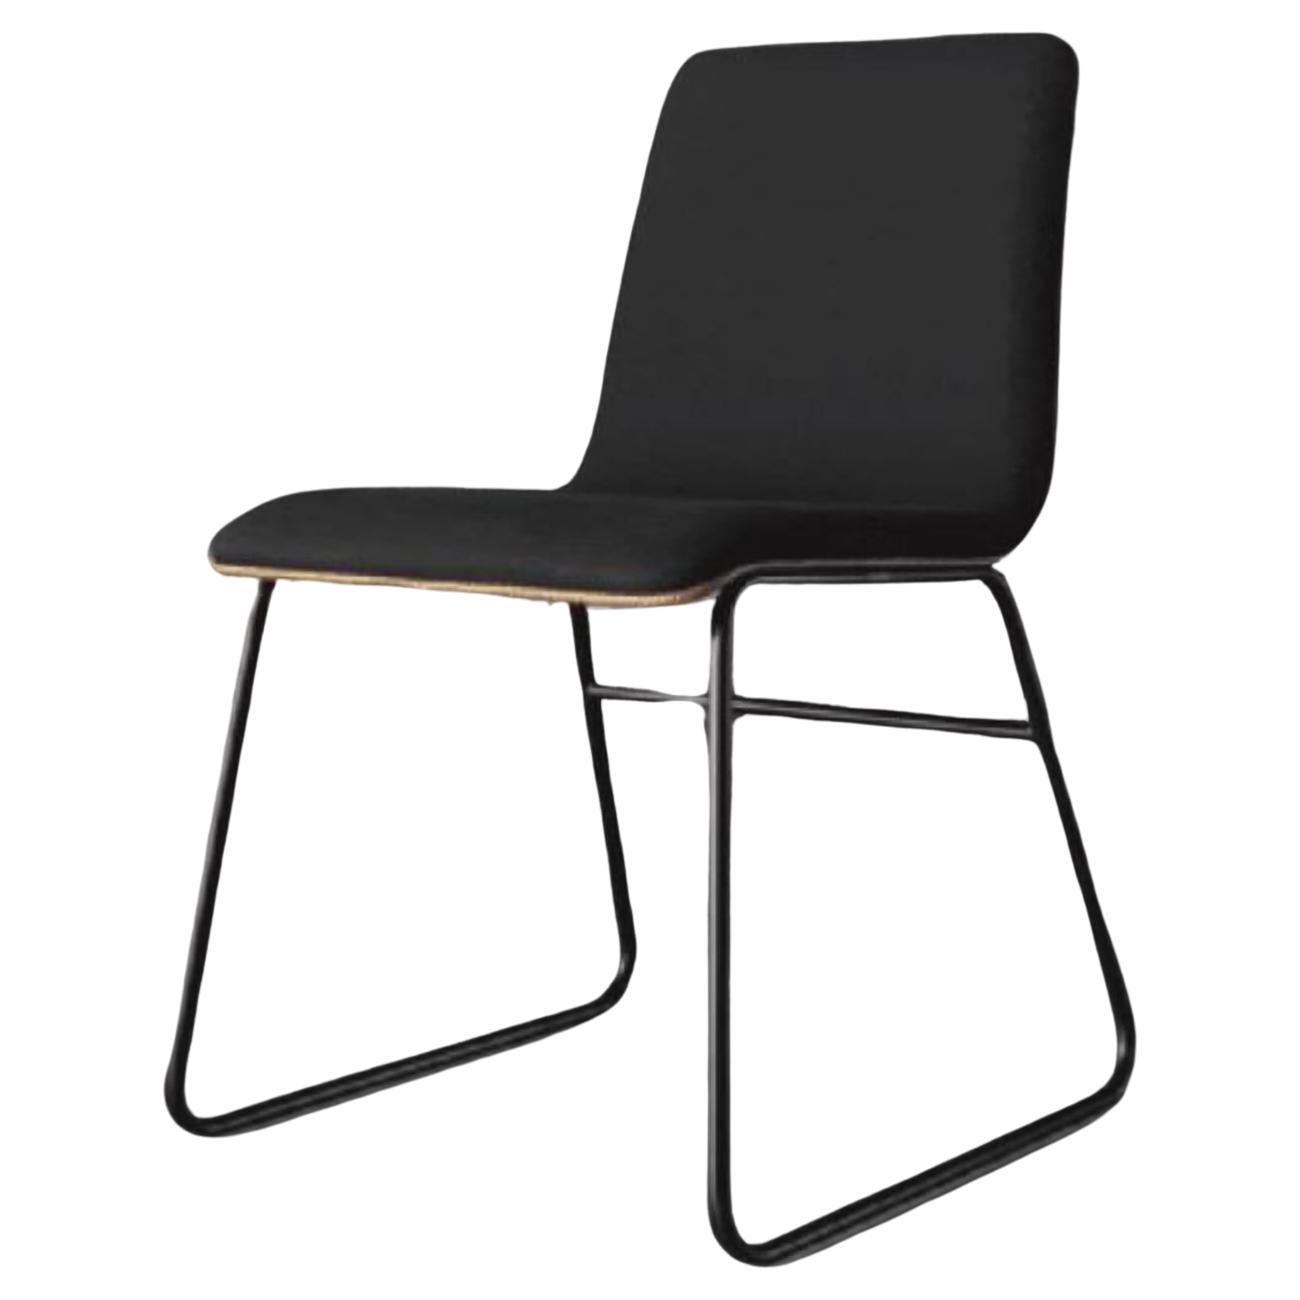 Presto Chair by Doimo Brasil For Sale